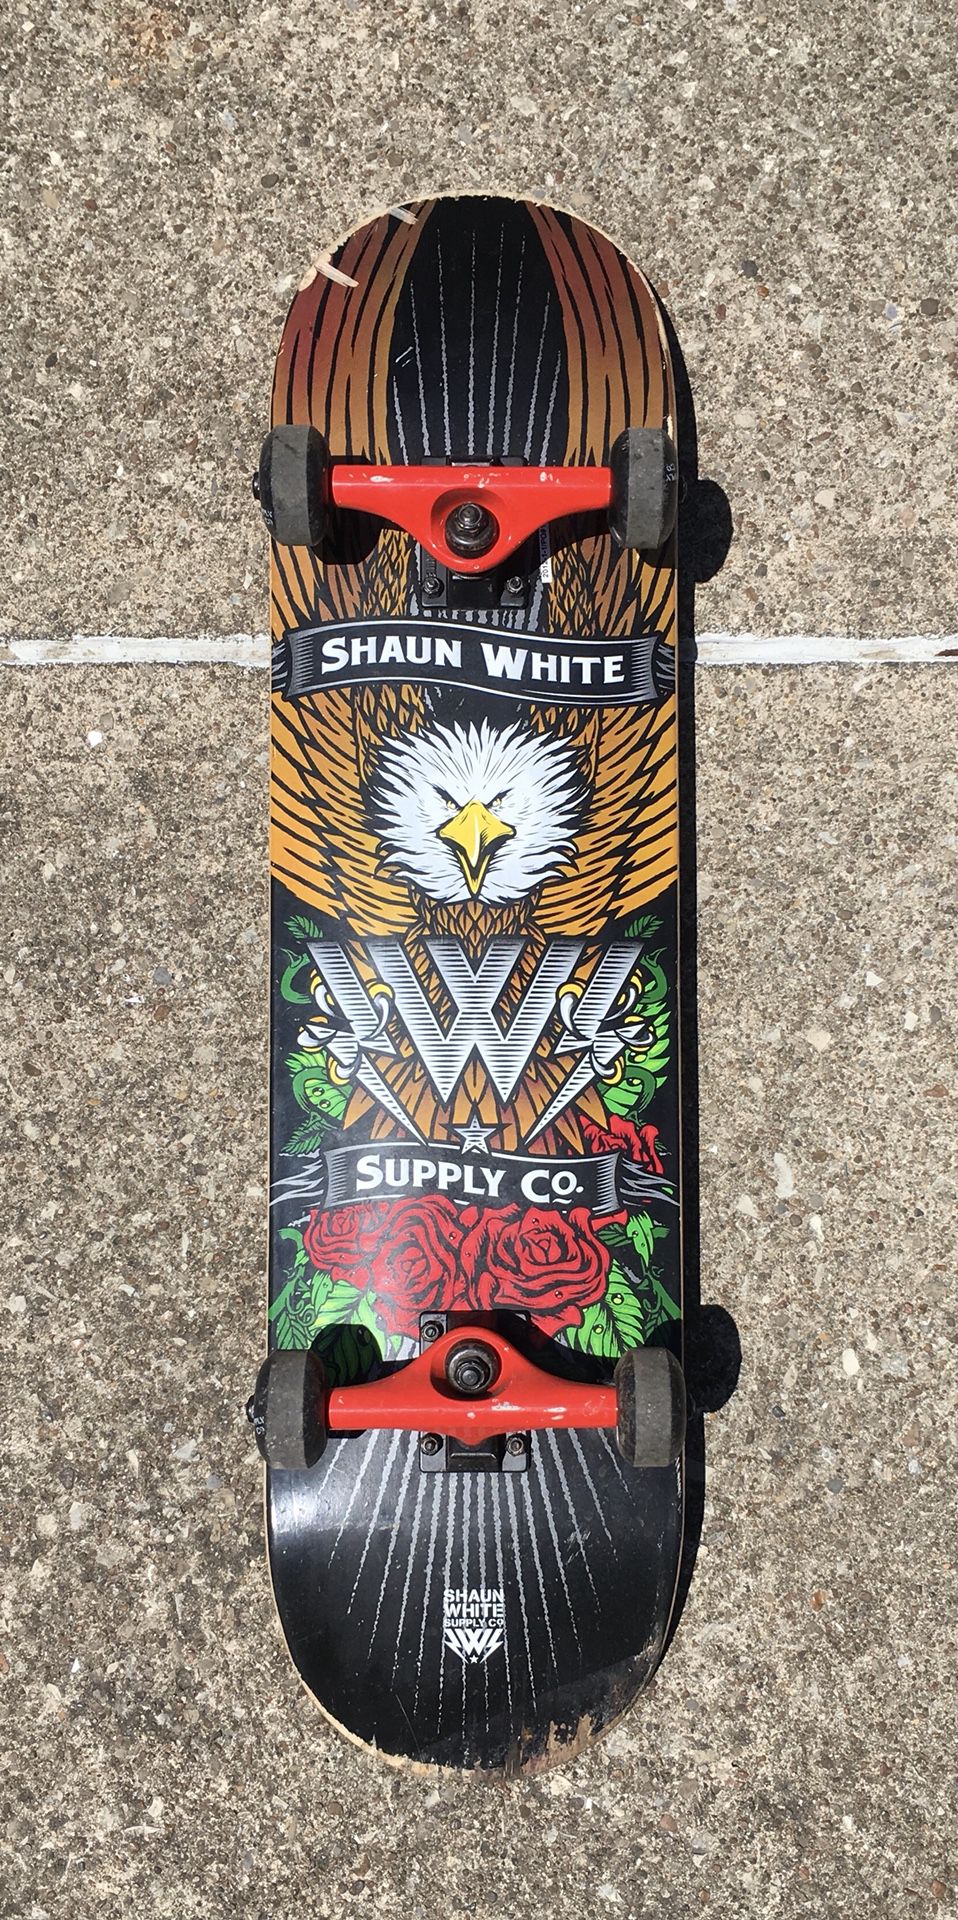 Shaun White vintage skateboard supply co. Metal trucks good shape skate board wheels